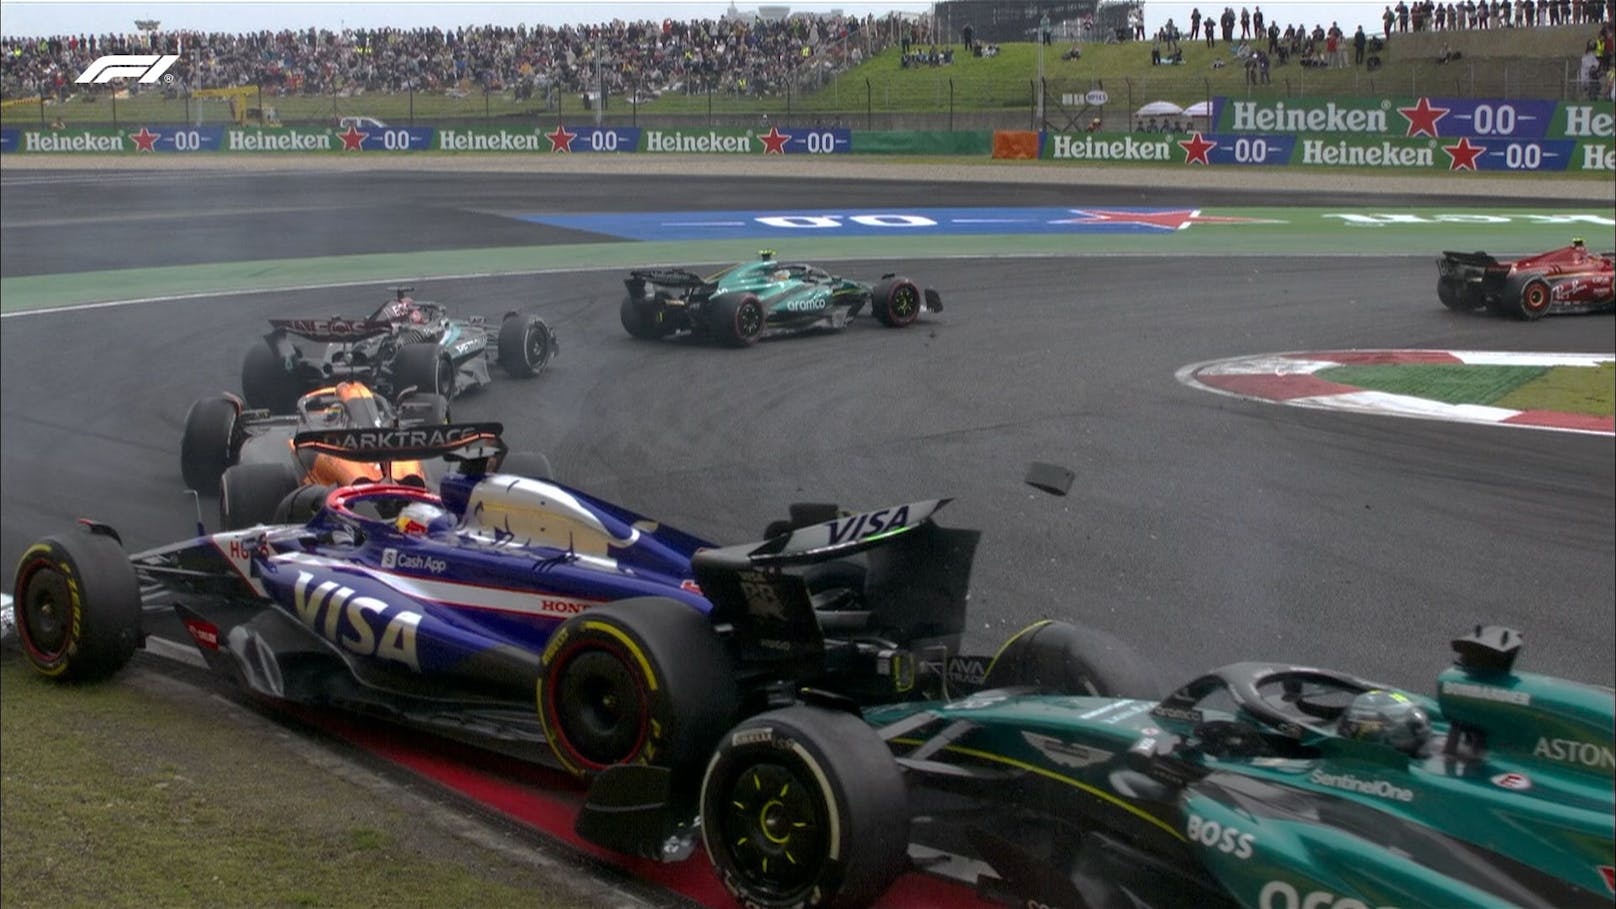 Ricciardo nach Unfall stinksauer: "F*** that guy"